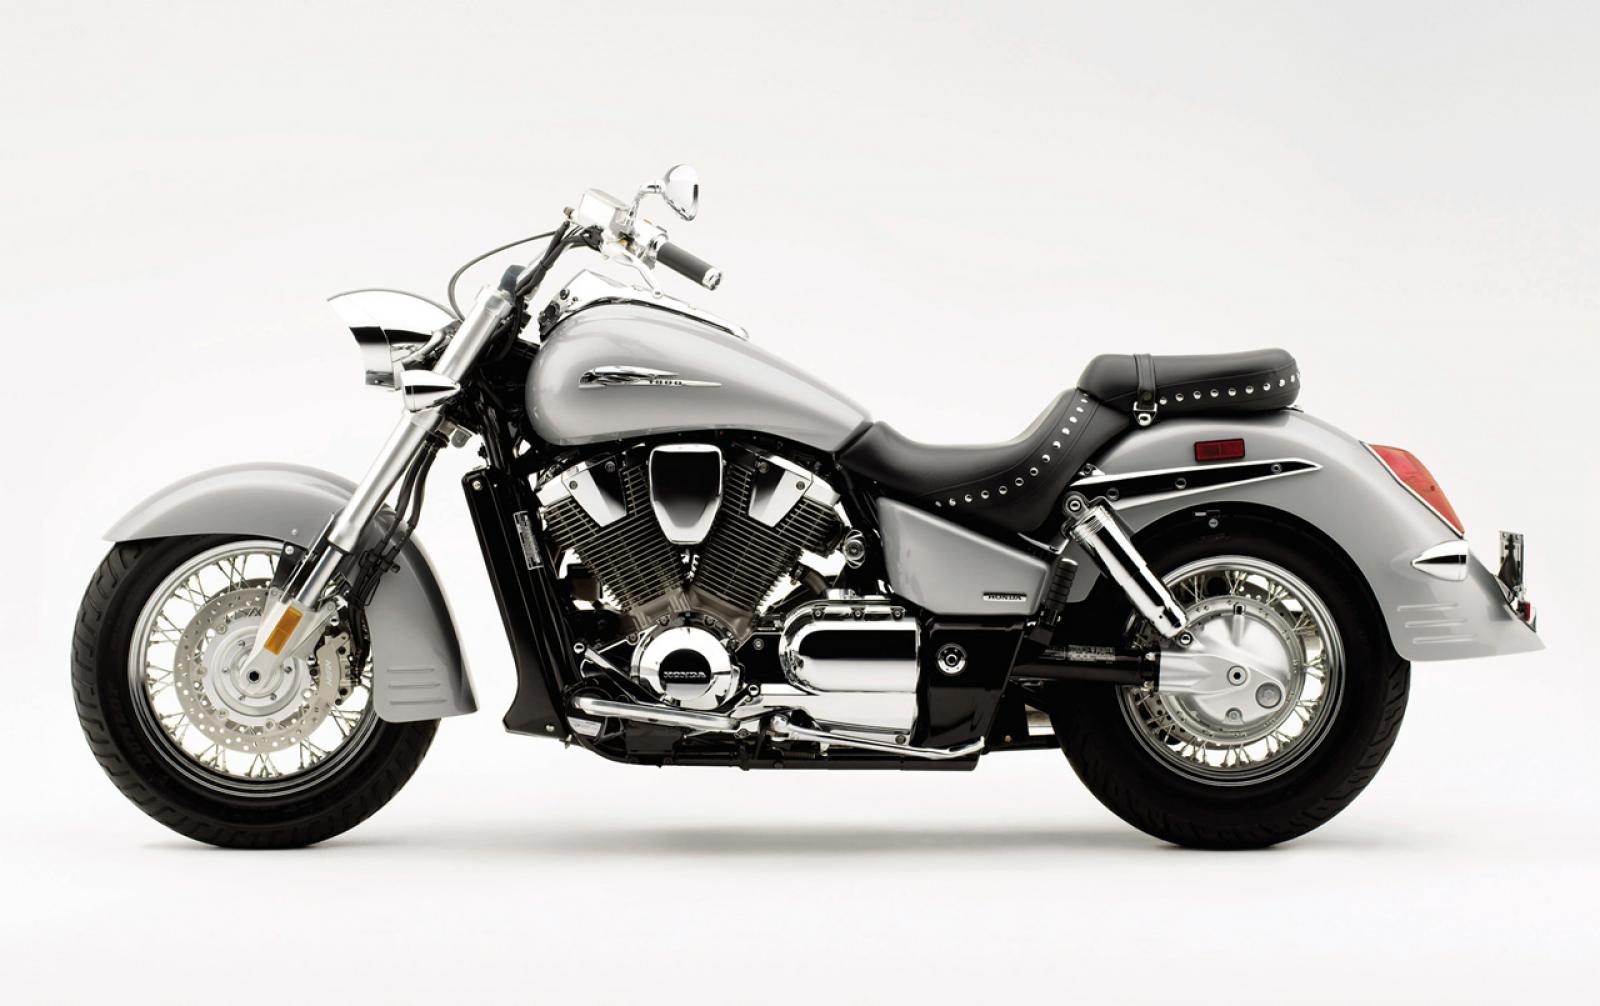 Мотоцикл honda vtx1800 r 2002 — разбираемся по порядку